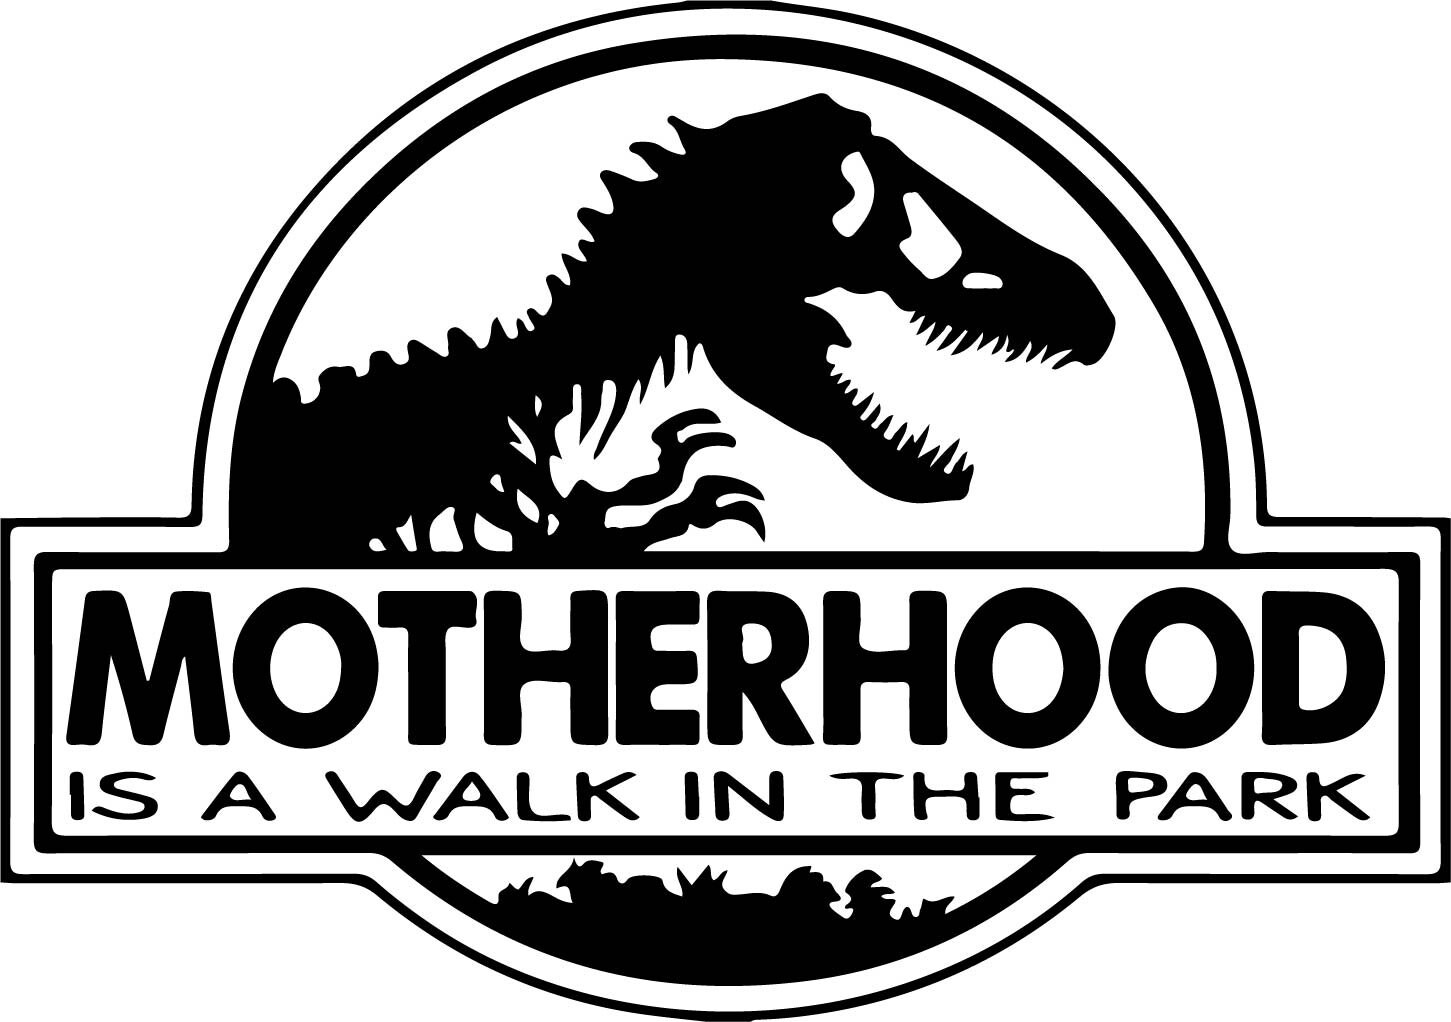 Motherhood is a walk in the park svgpngjpegepsdxfaipdf | Etsy